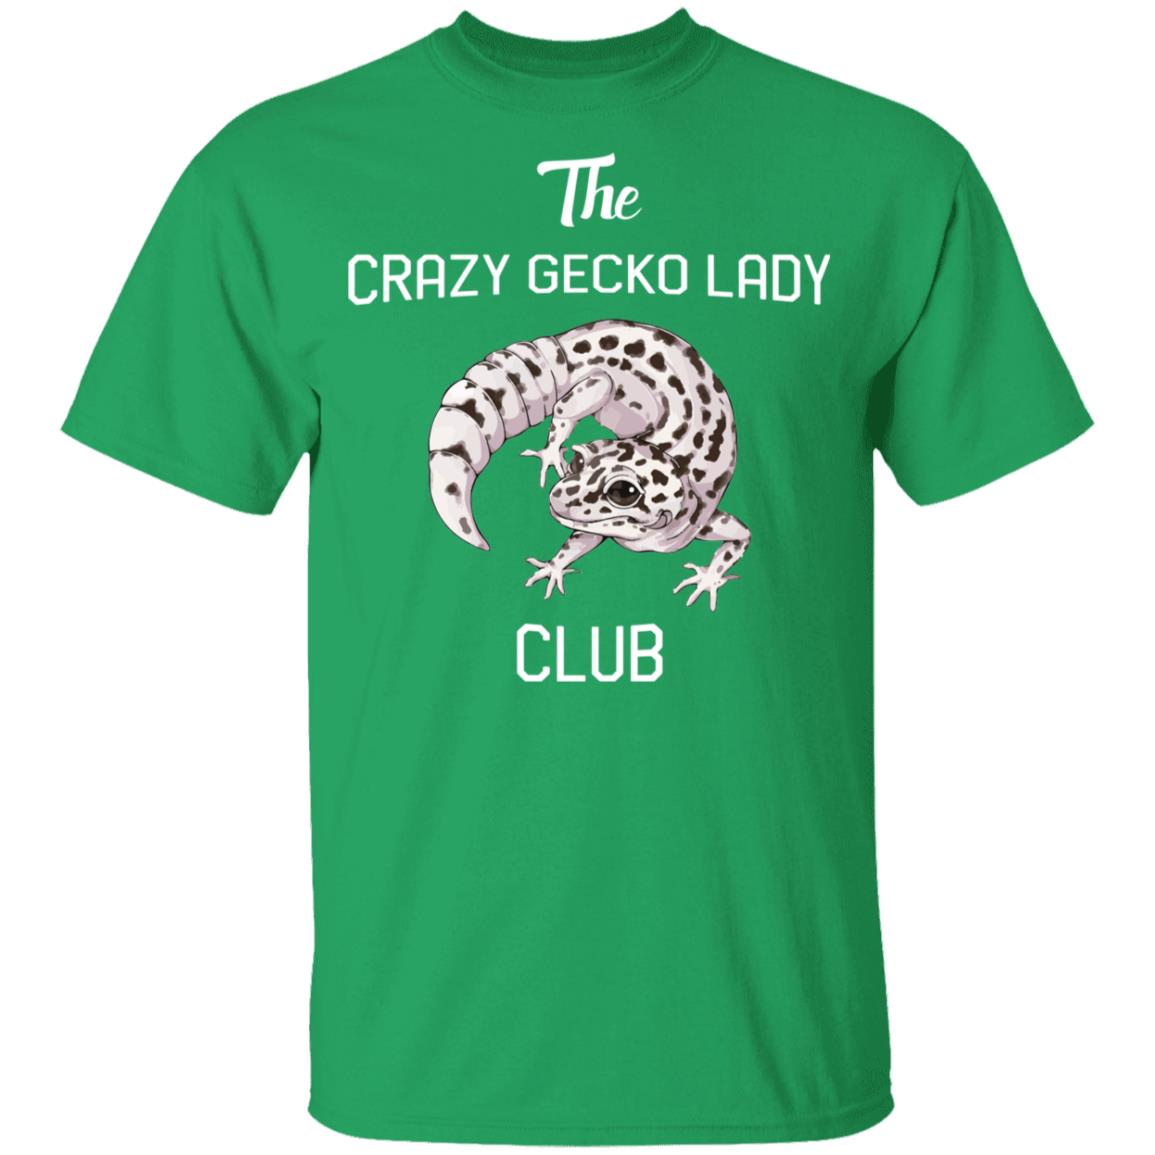 The Crazy Gecko Lady Club - Youth T-Shirt